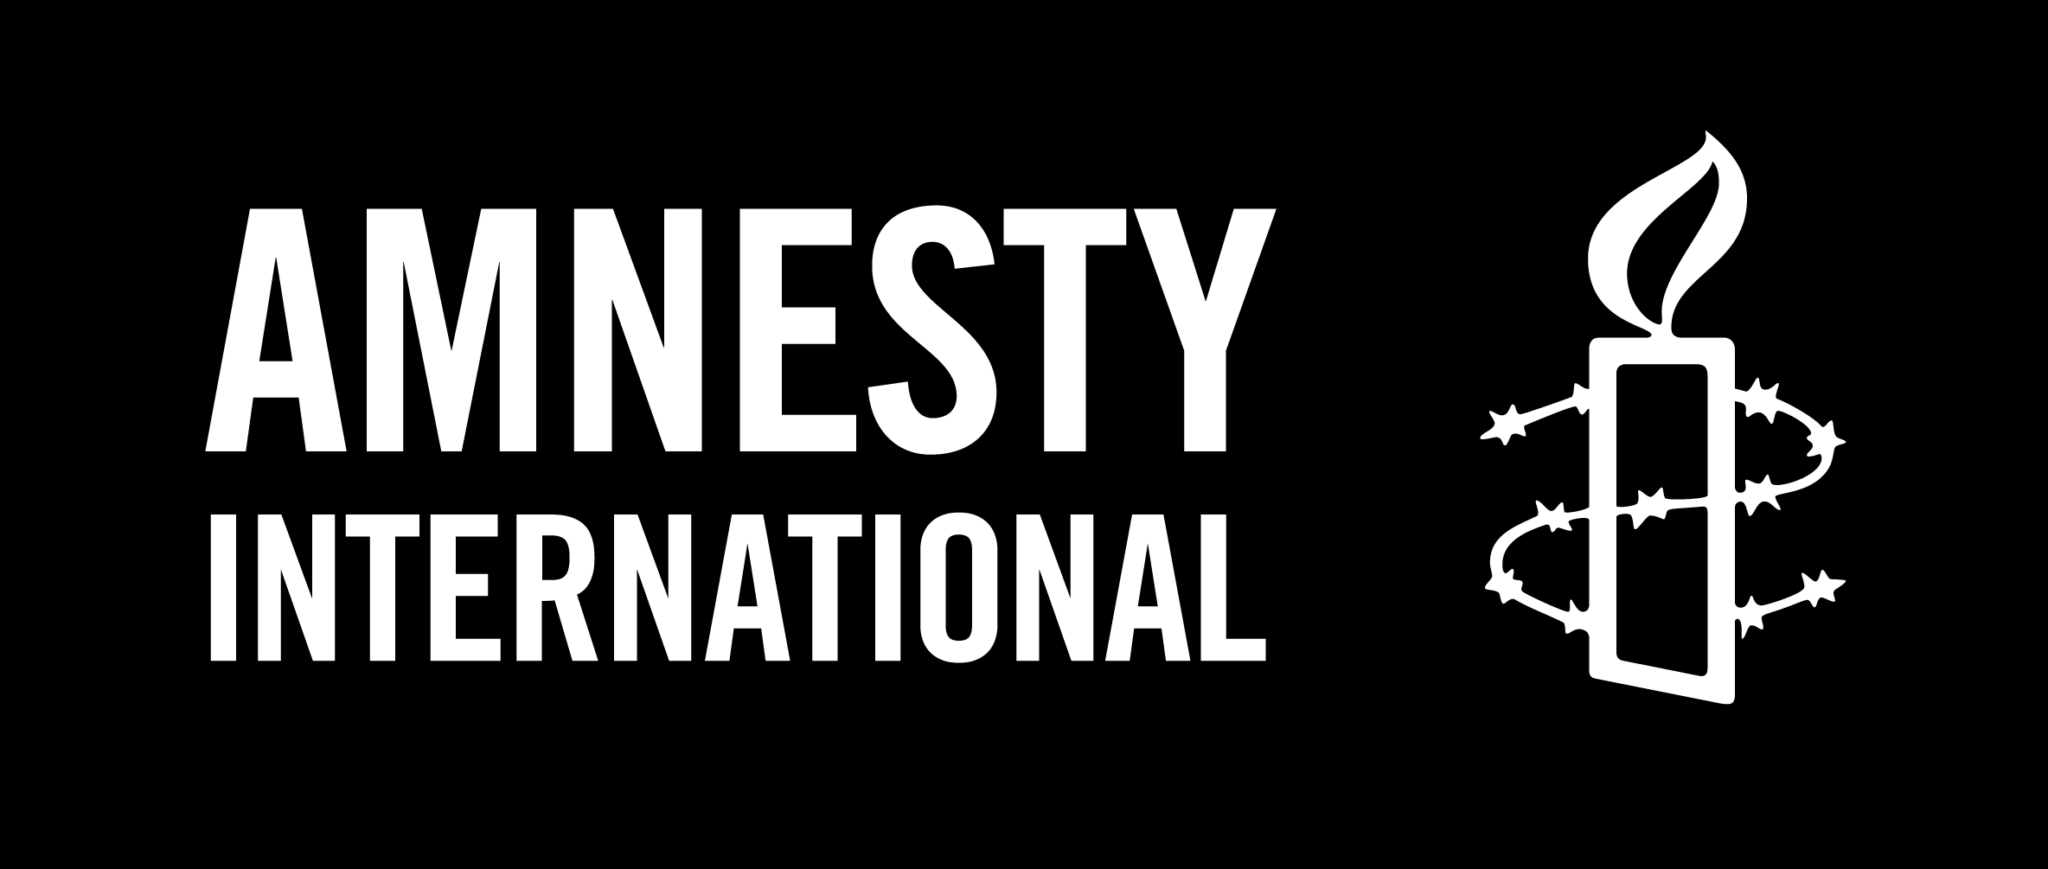 amnesty international logo with black background (web version)